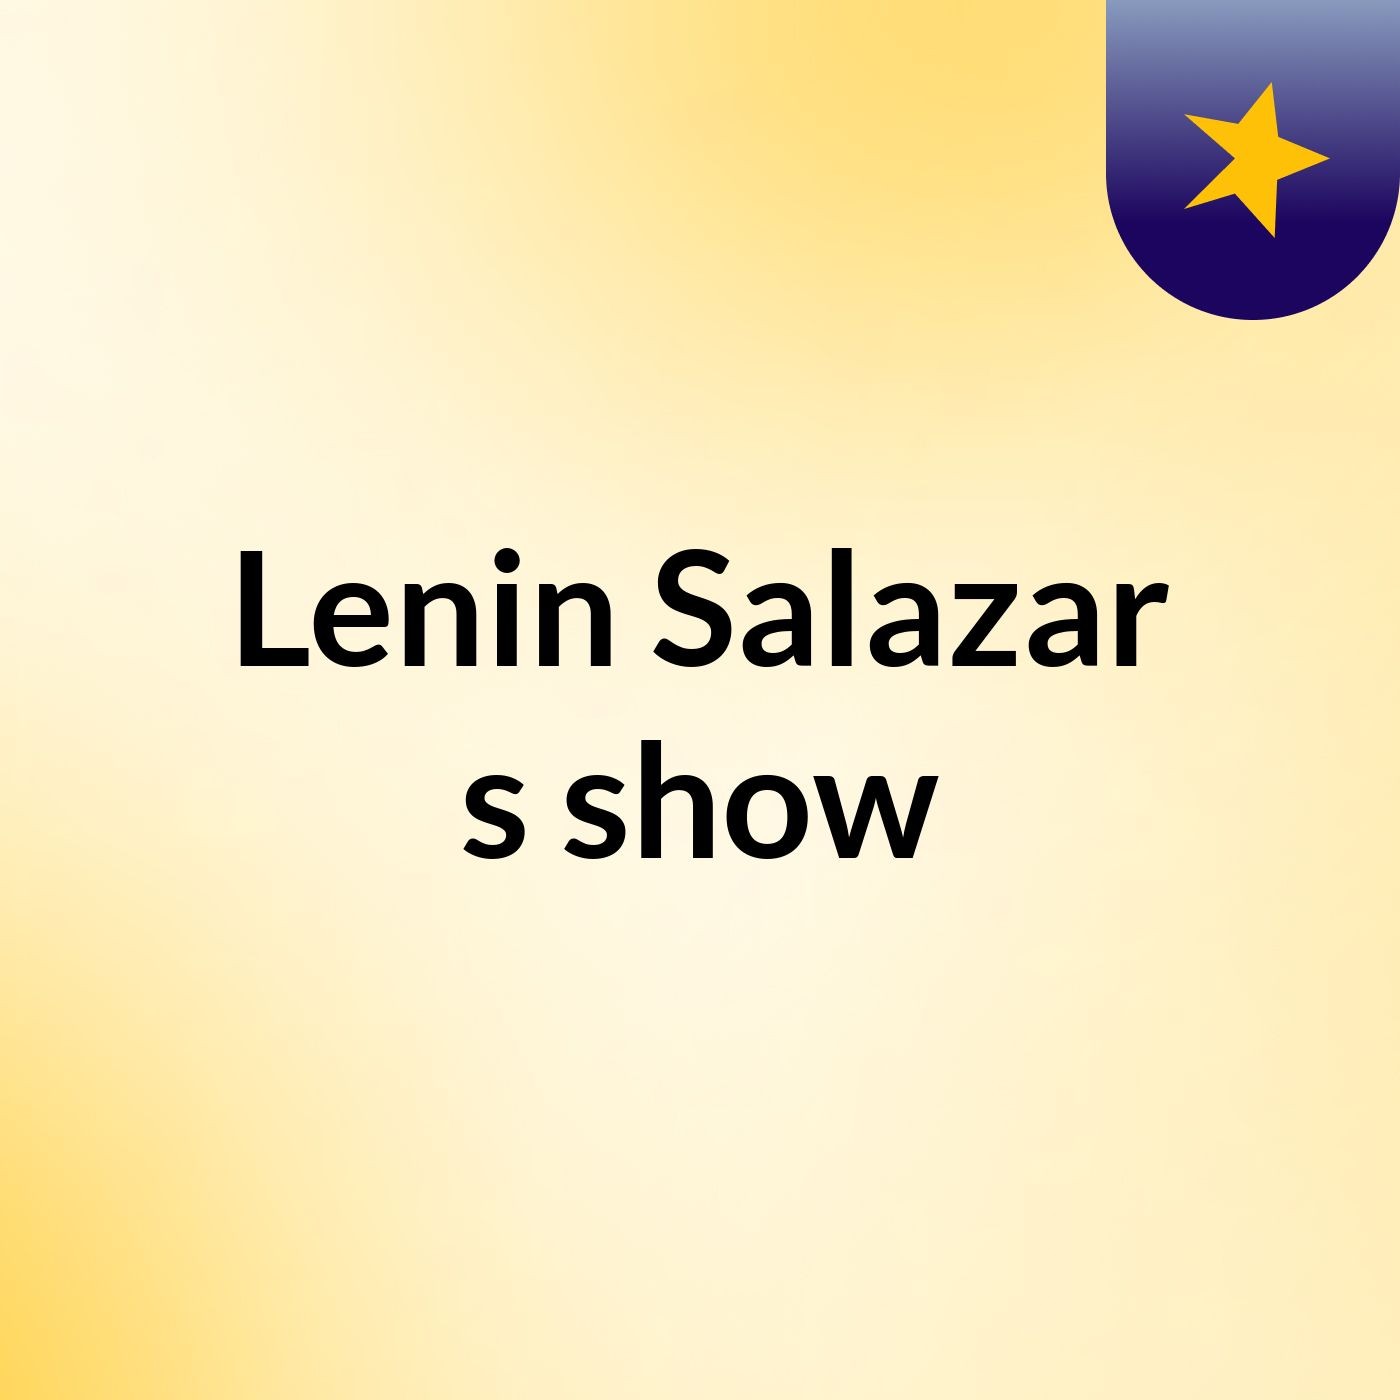 Lenin Salazar's show